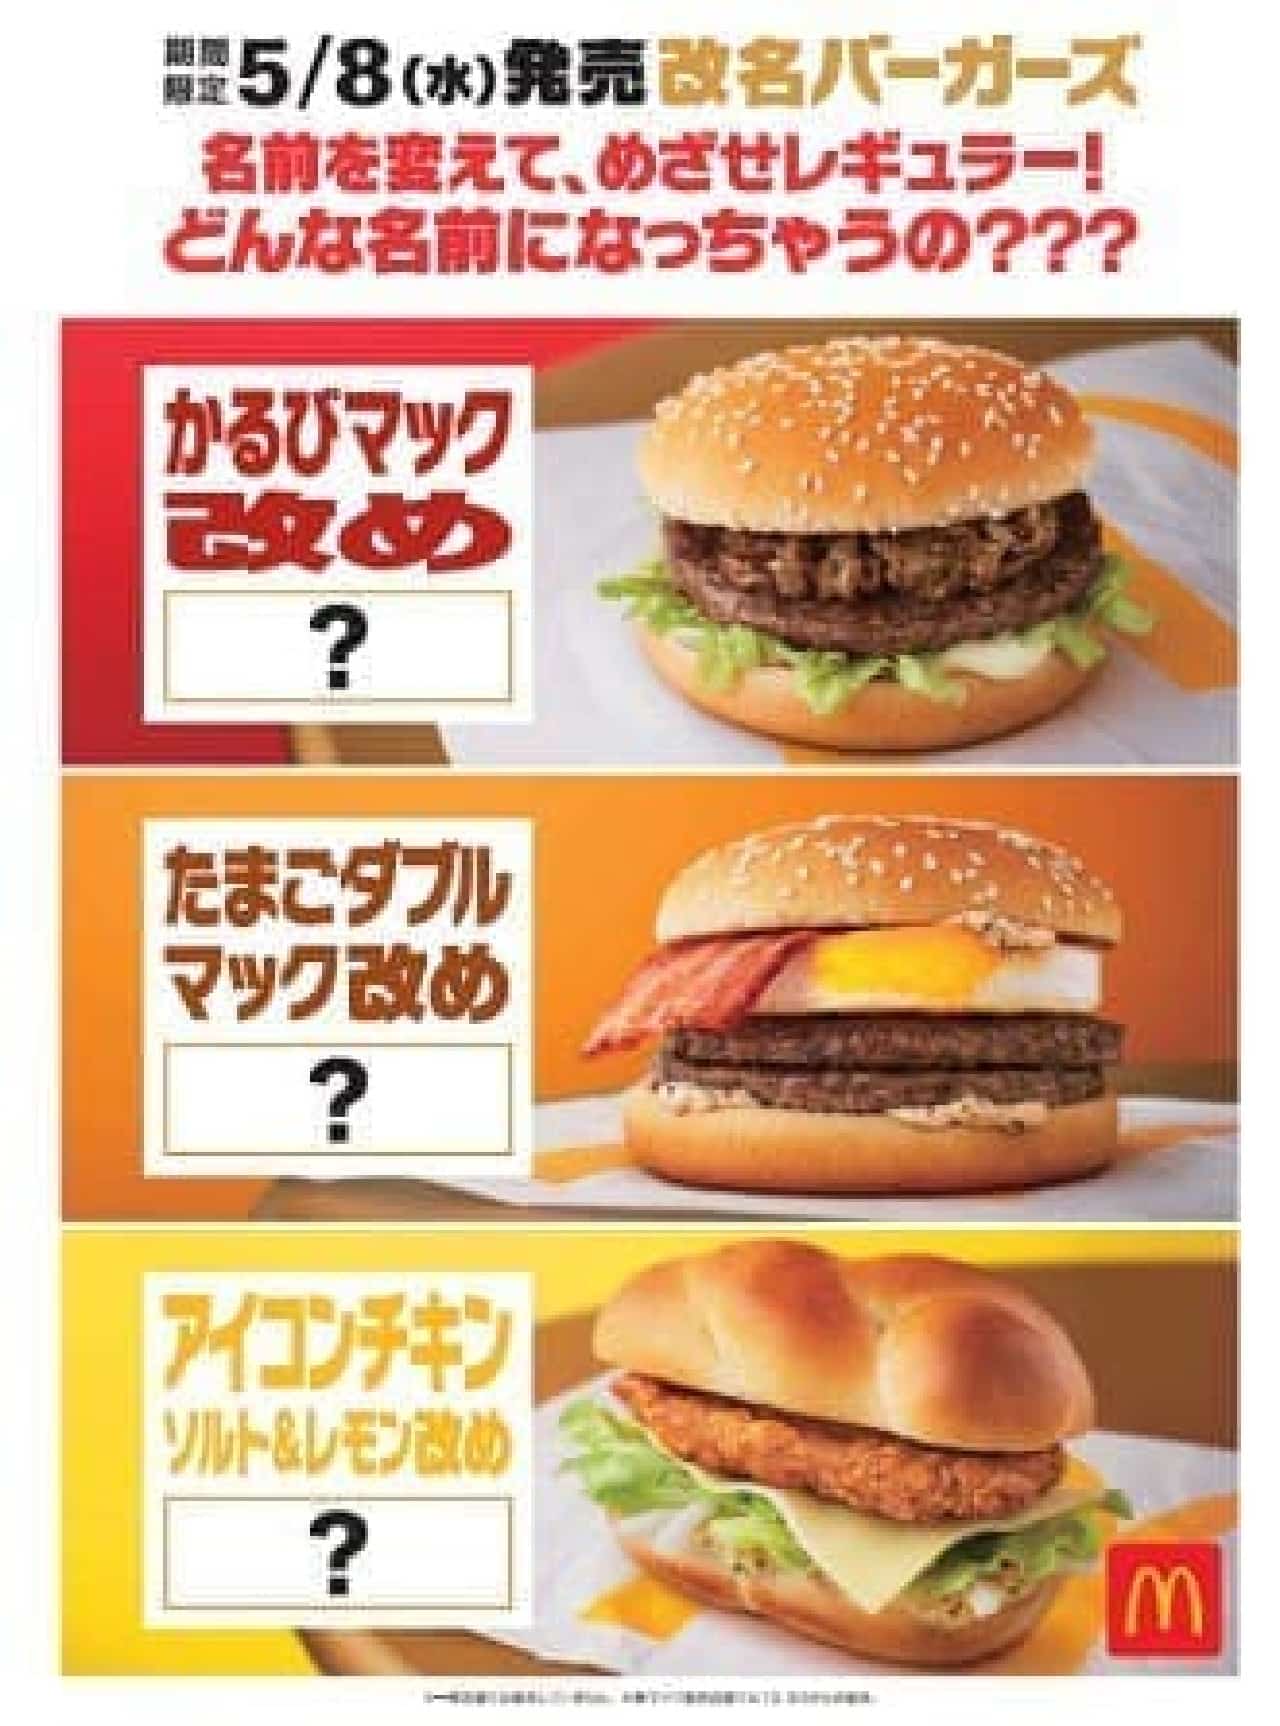 McDonald's "Renamed Burgers"